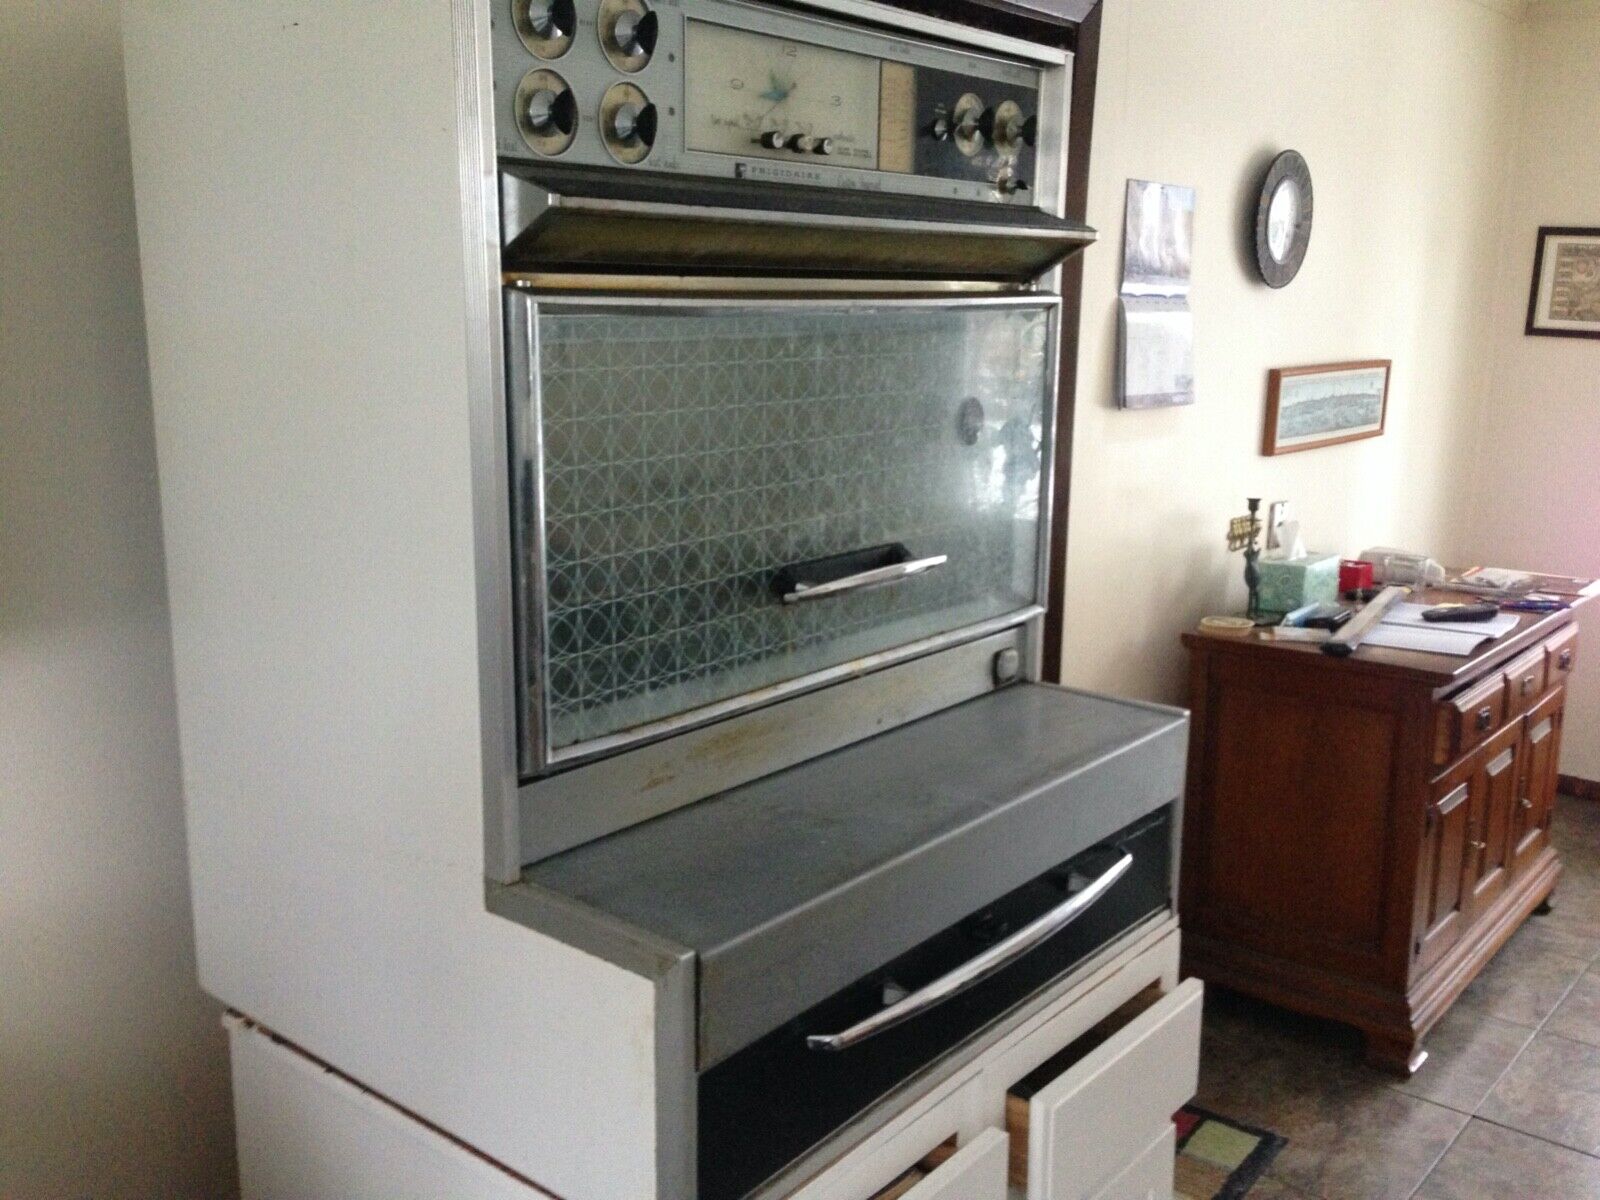 vintage stove range oven